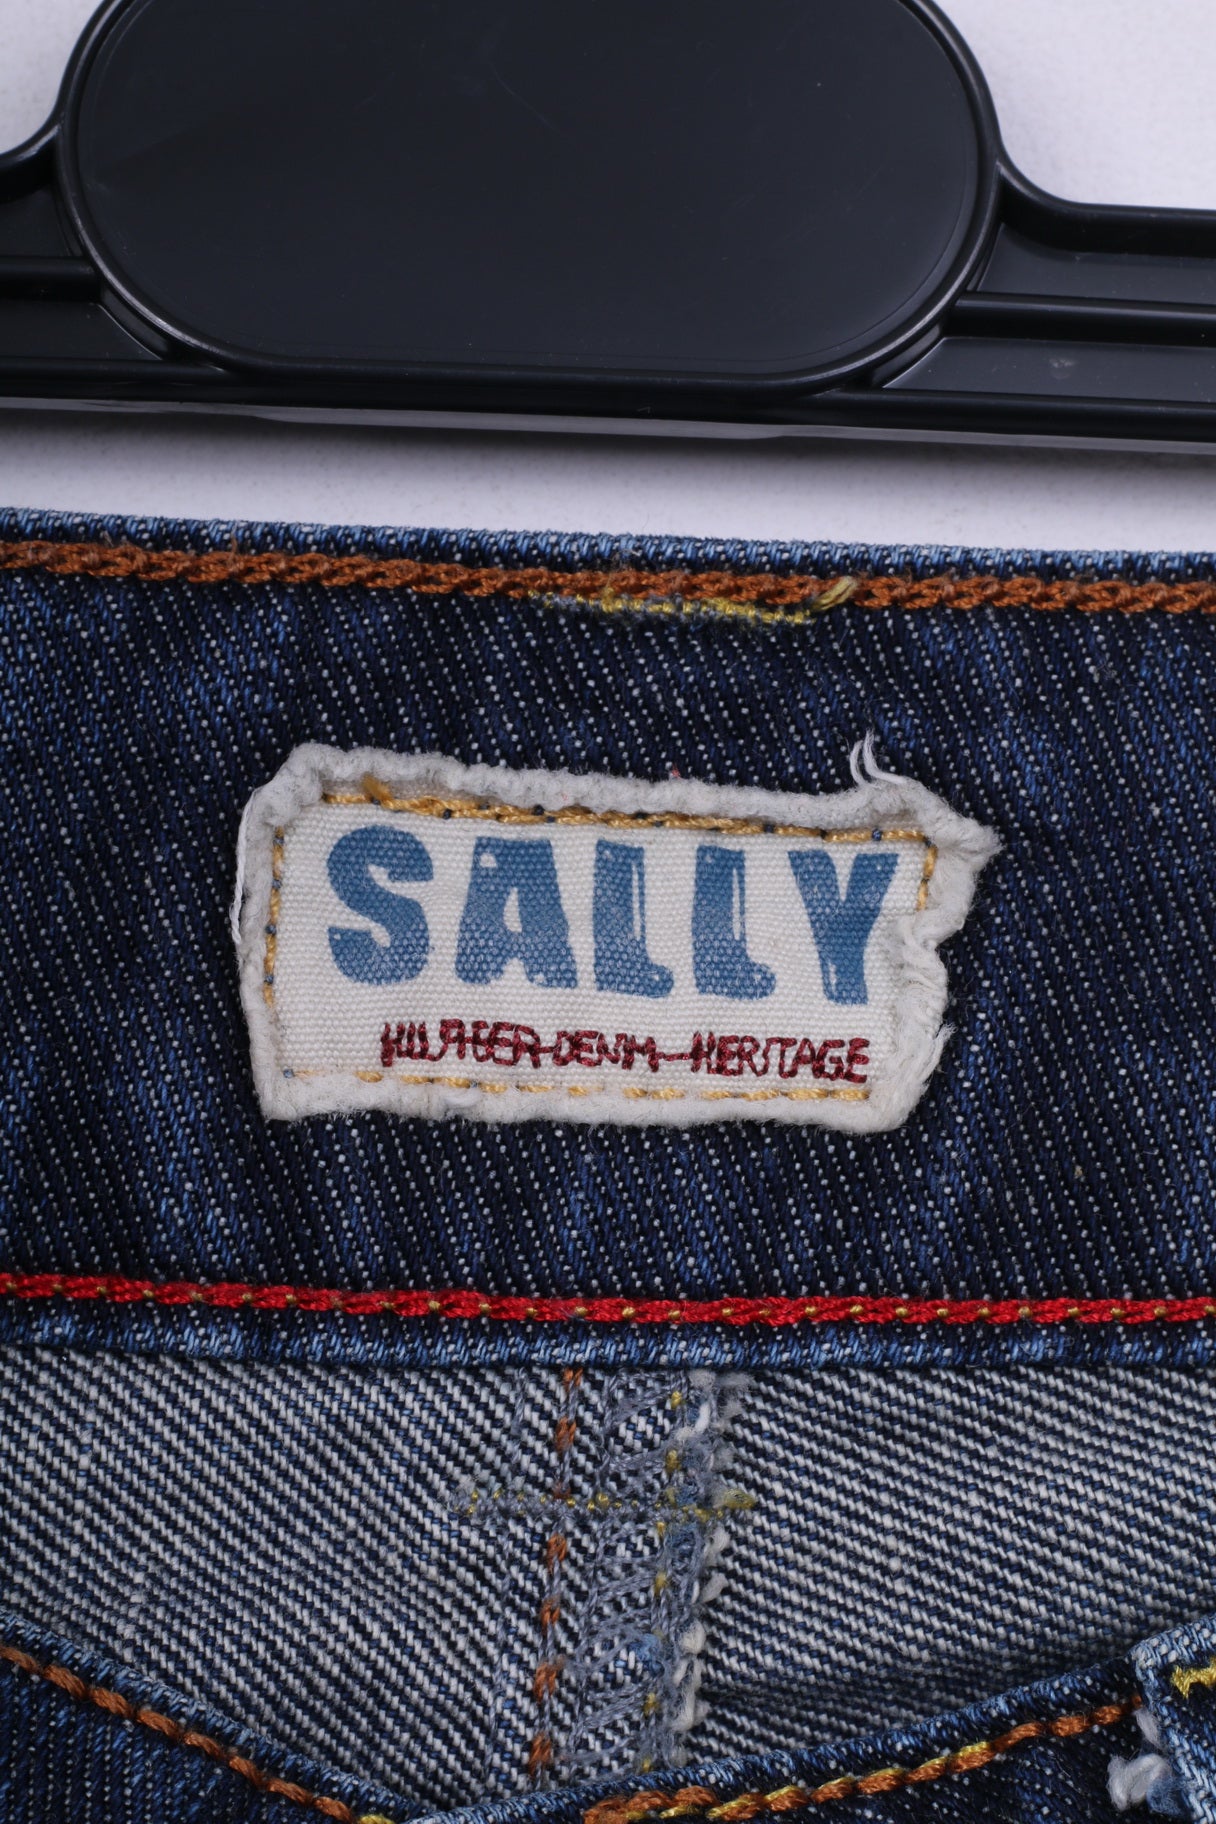 Hilfiger Denim Womens W29 L32 Jeans Sally Trousers Denim Old School Blue Cotton